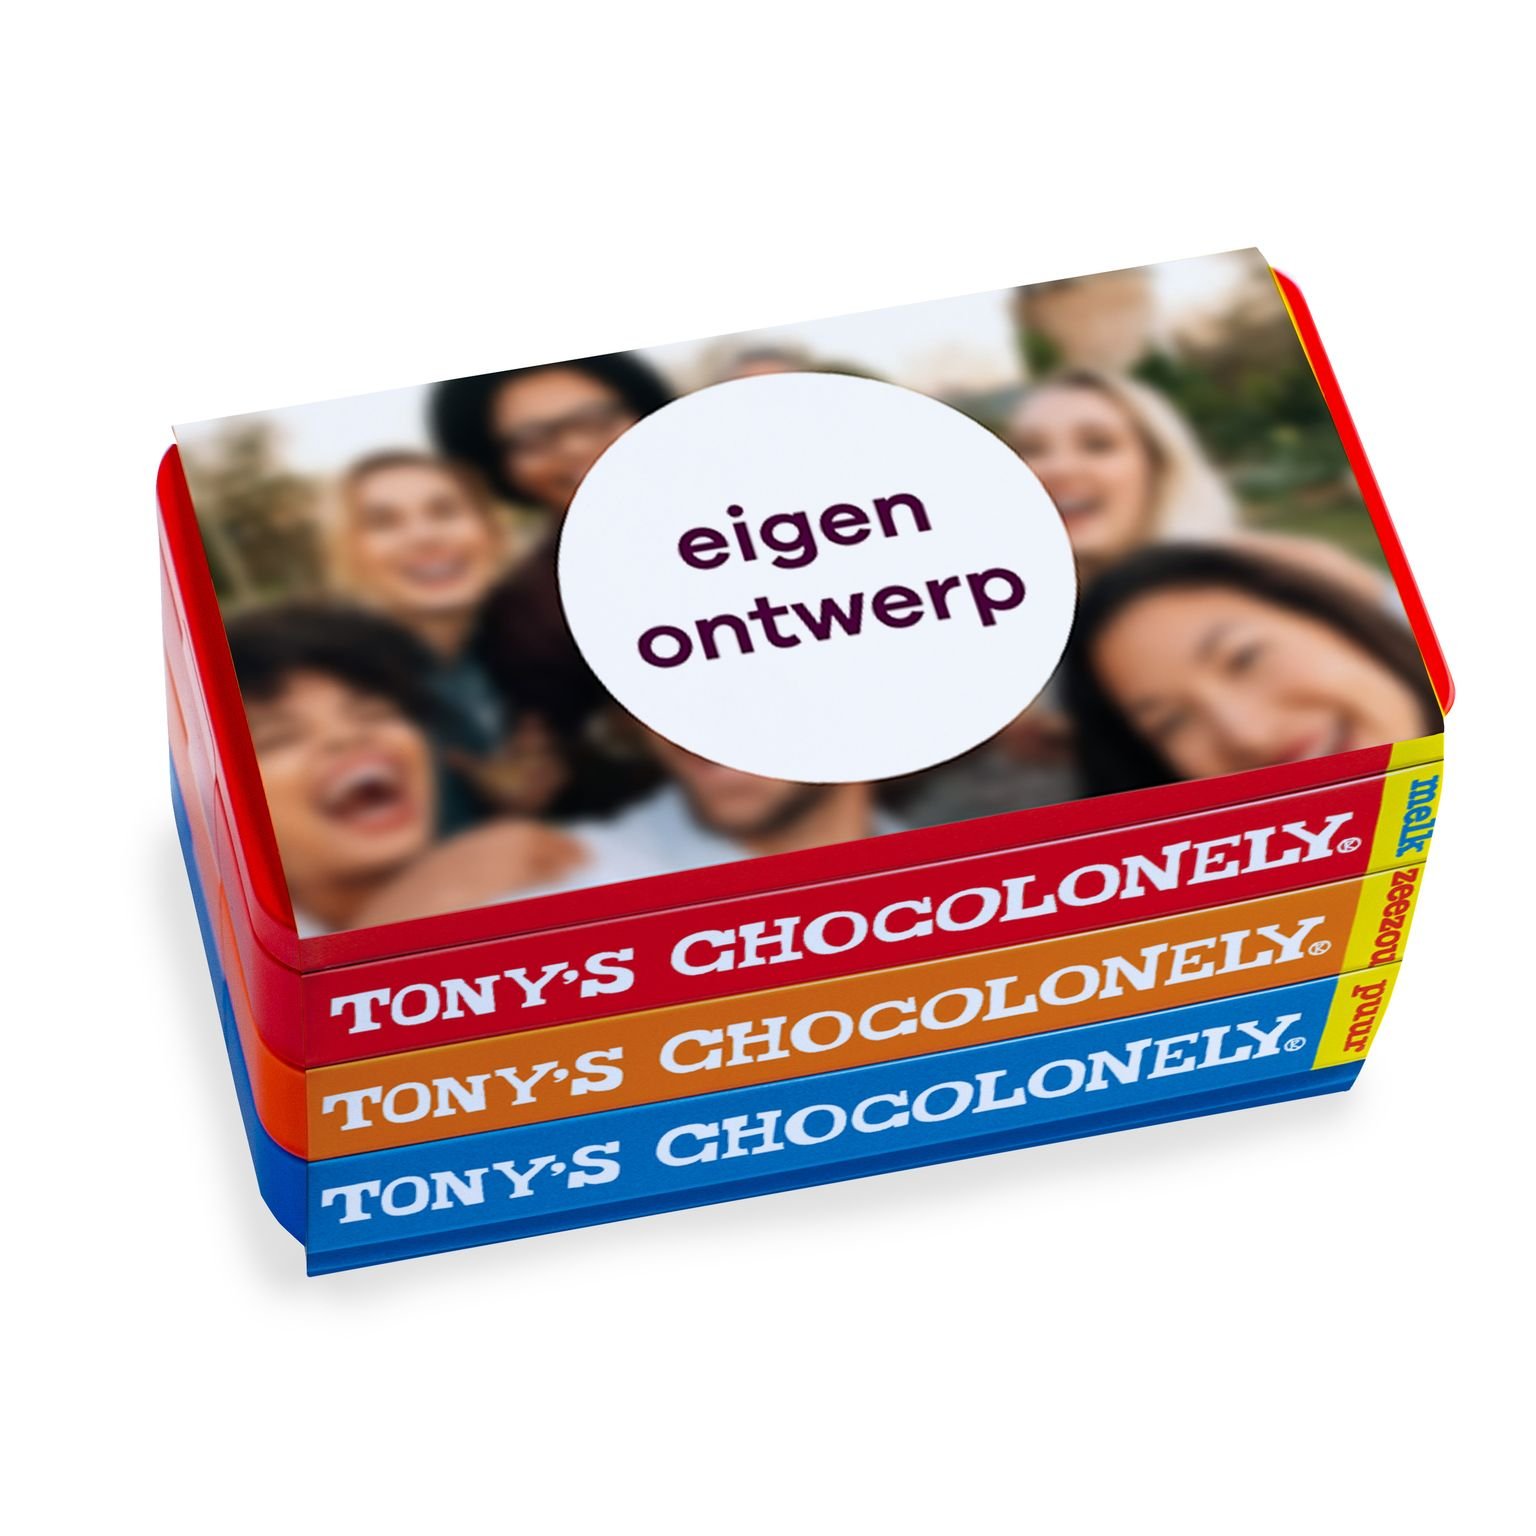 Tony's Chocolonely - Stapelblik - Eigen ontwerp - 540g